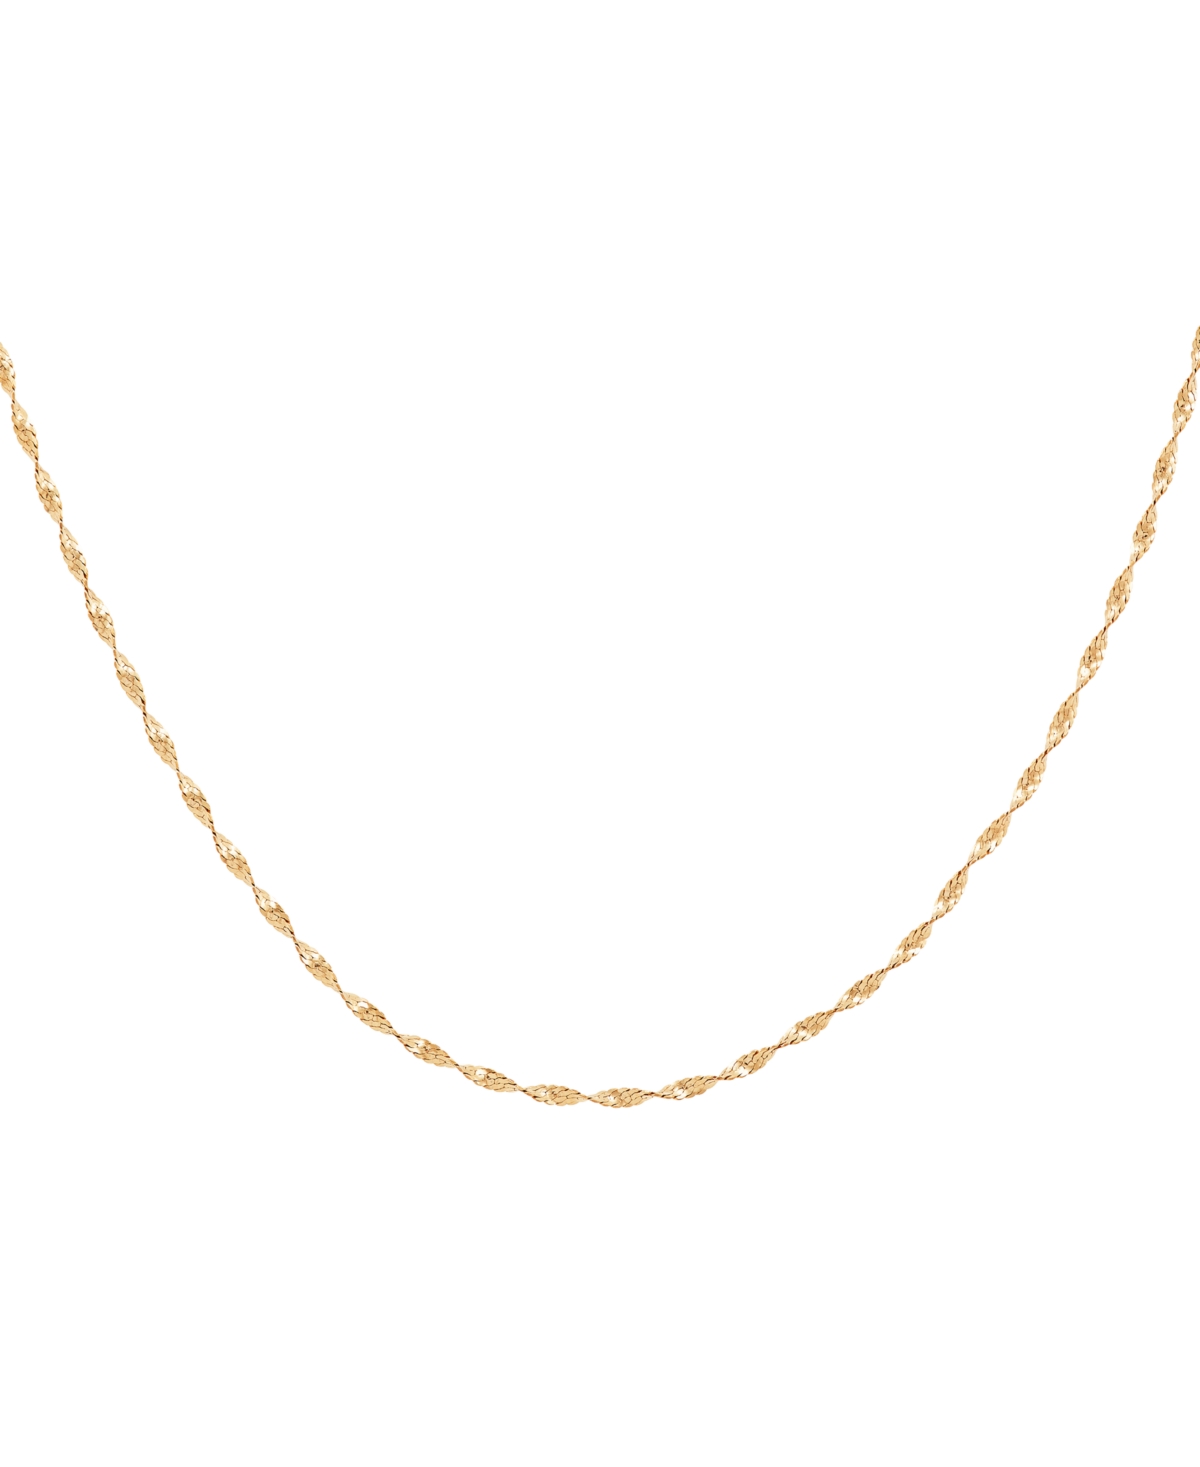 Fine Bonanza Twist Link 18" Chain Necklace in 14k Gold - Gold